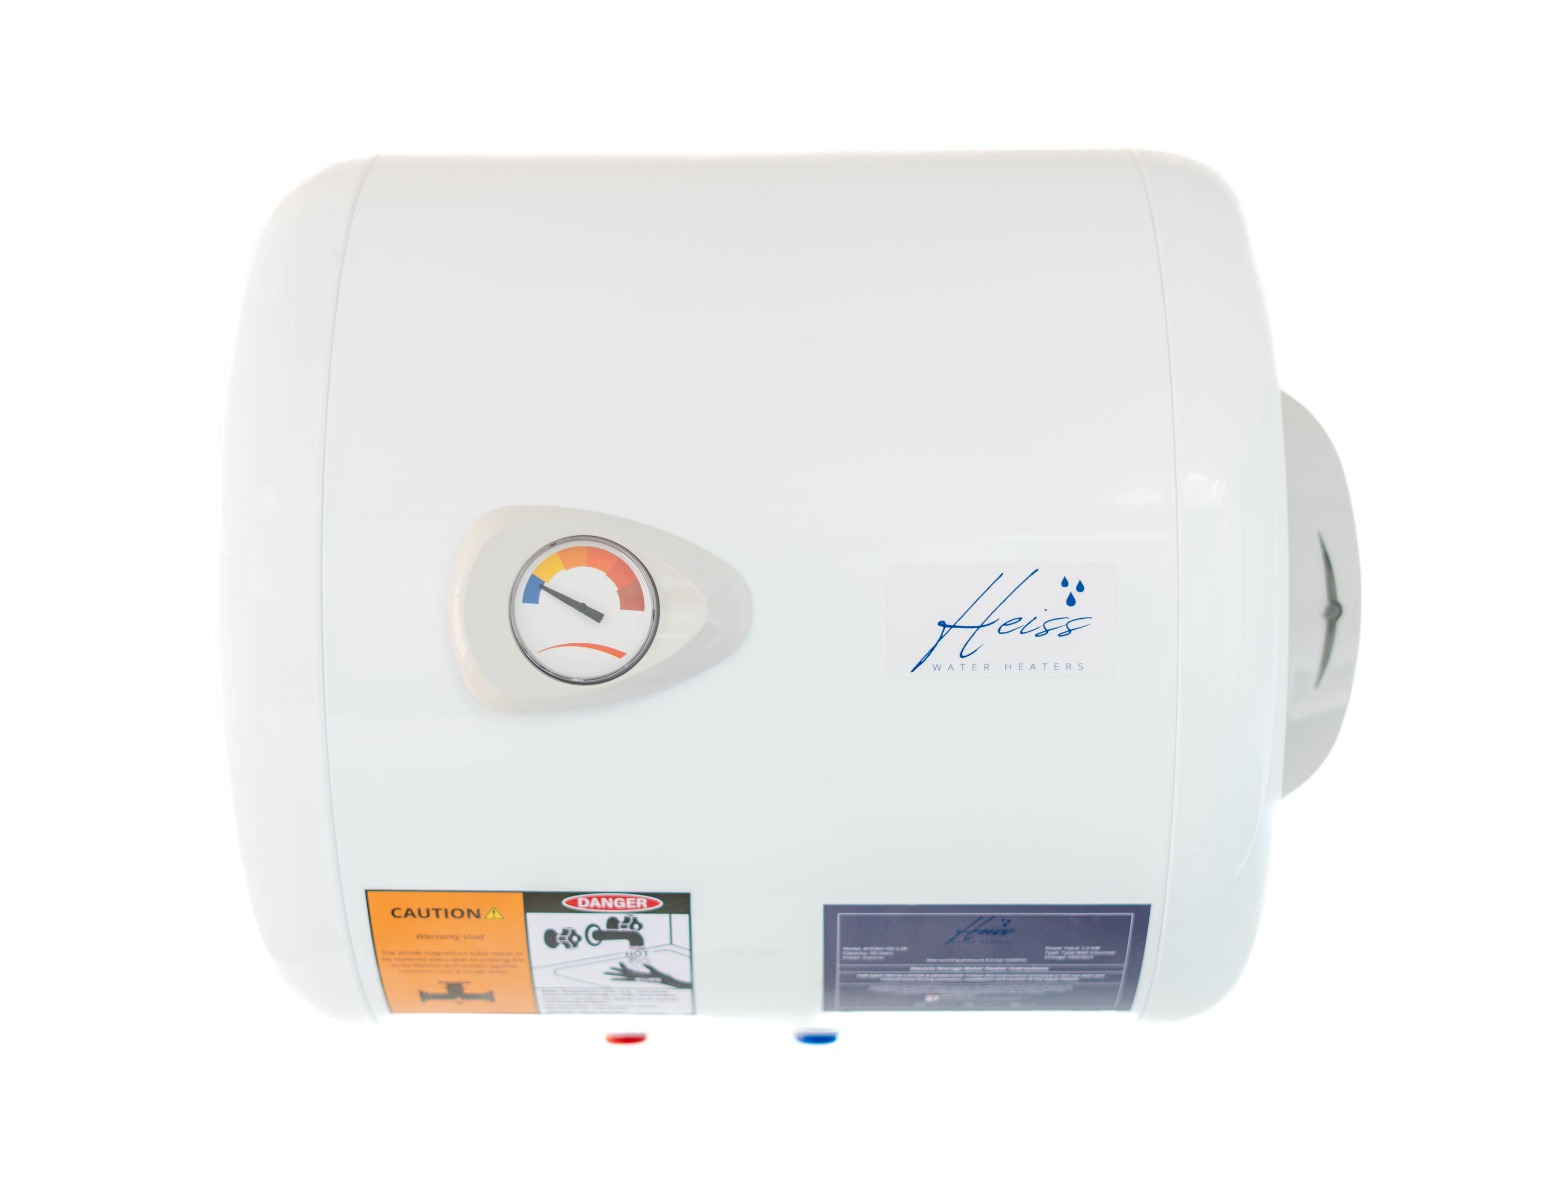 Heiss Electric Water Heater, 50 Liters, White - HEWH-50-1.2K